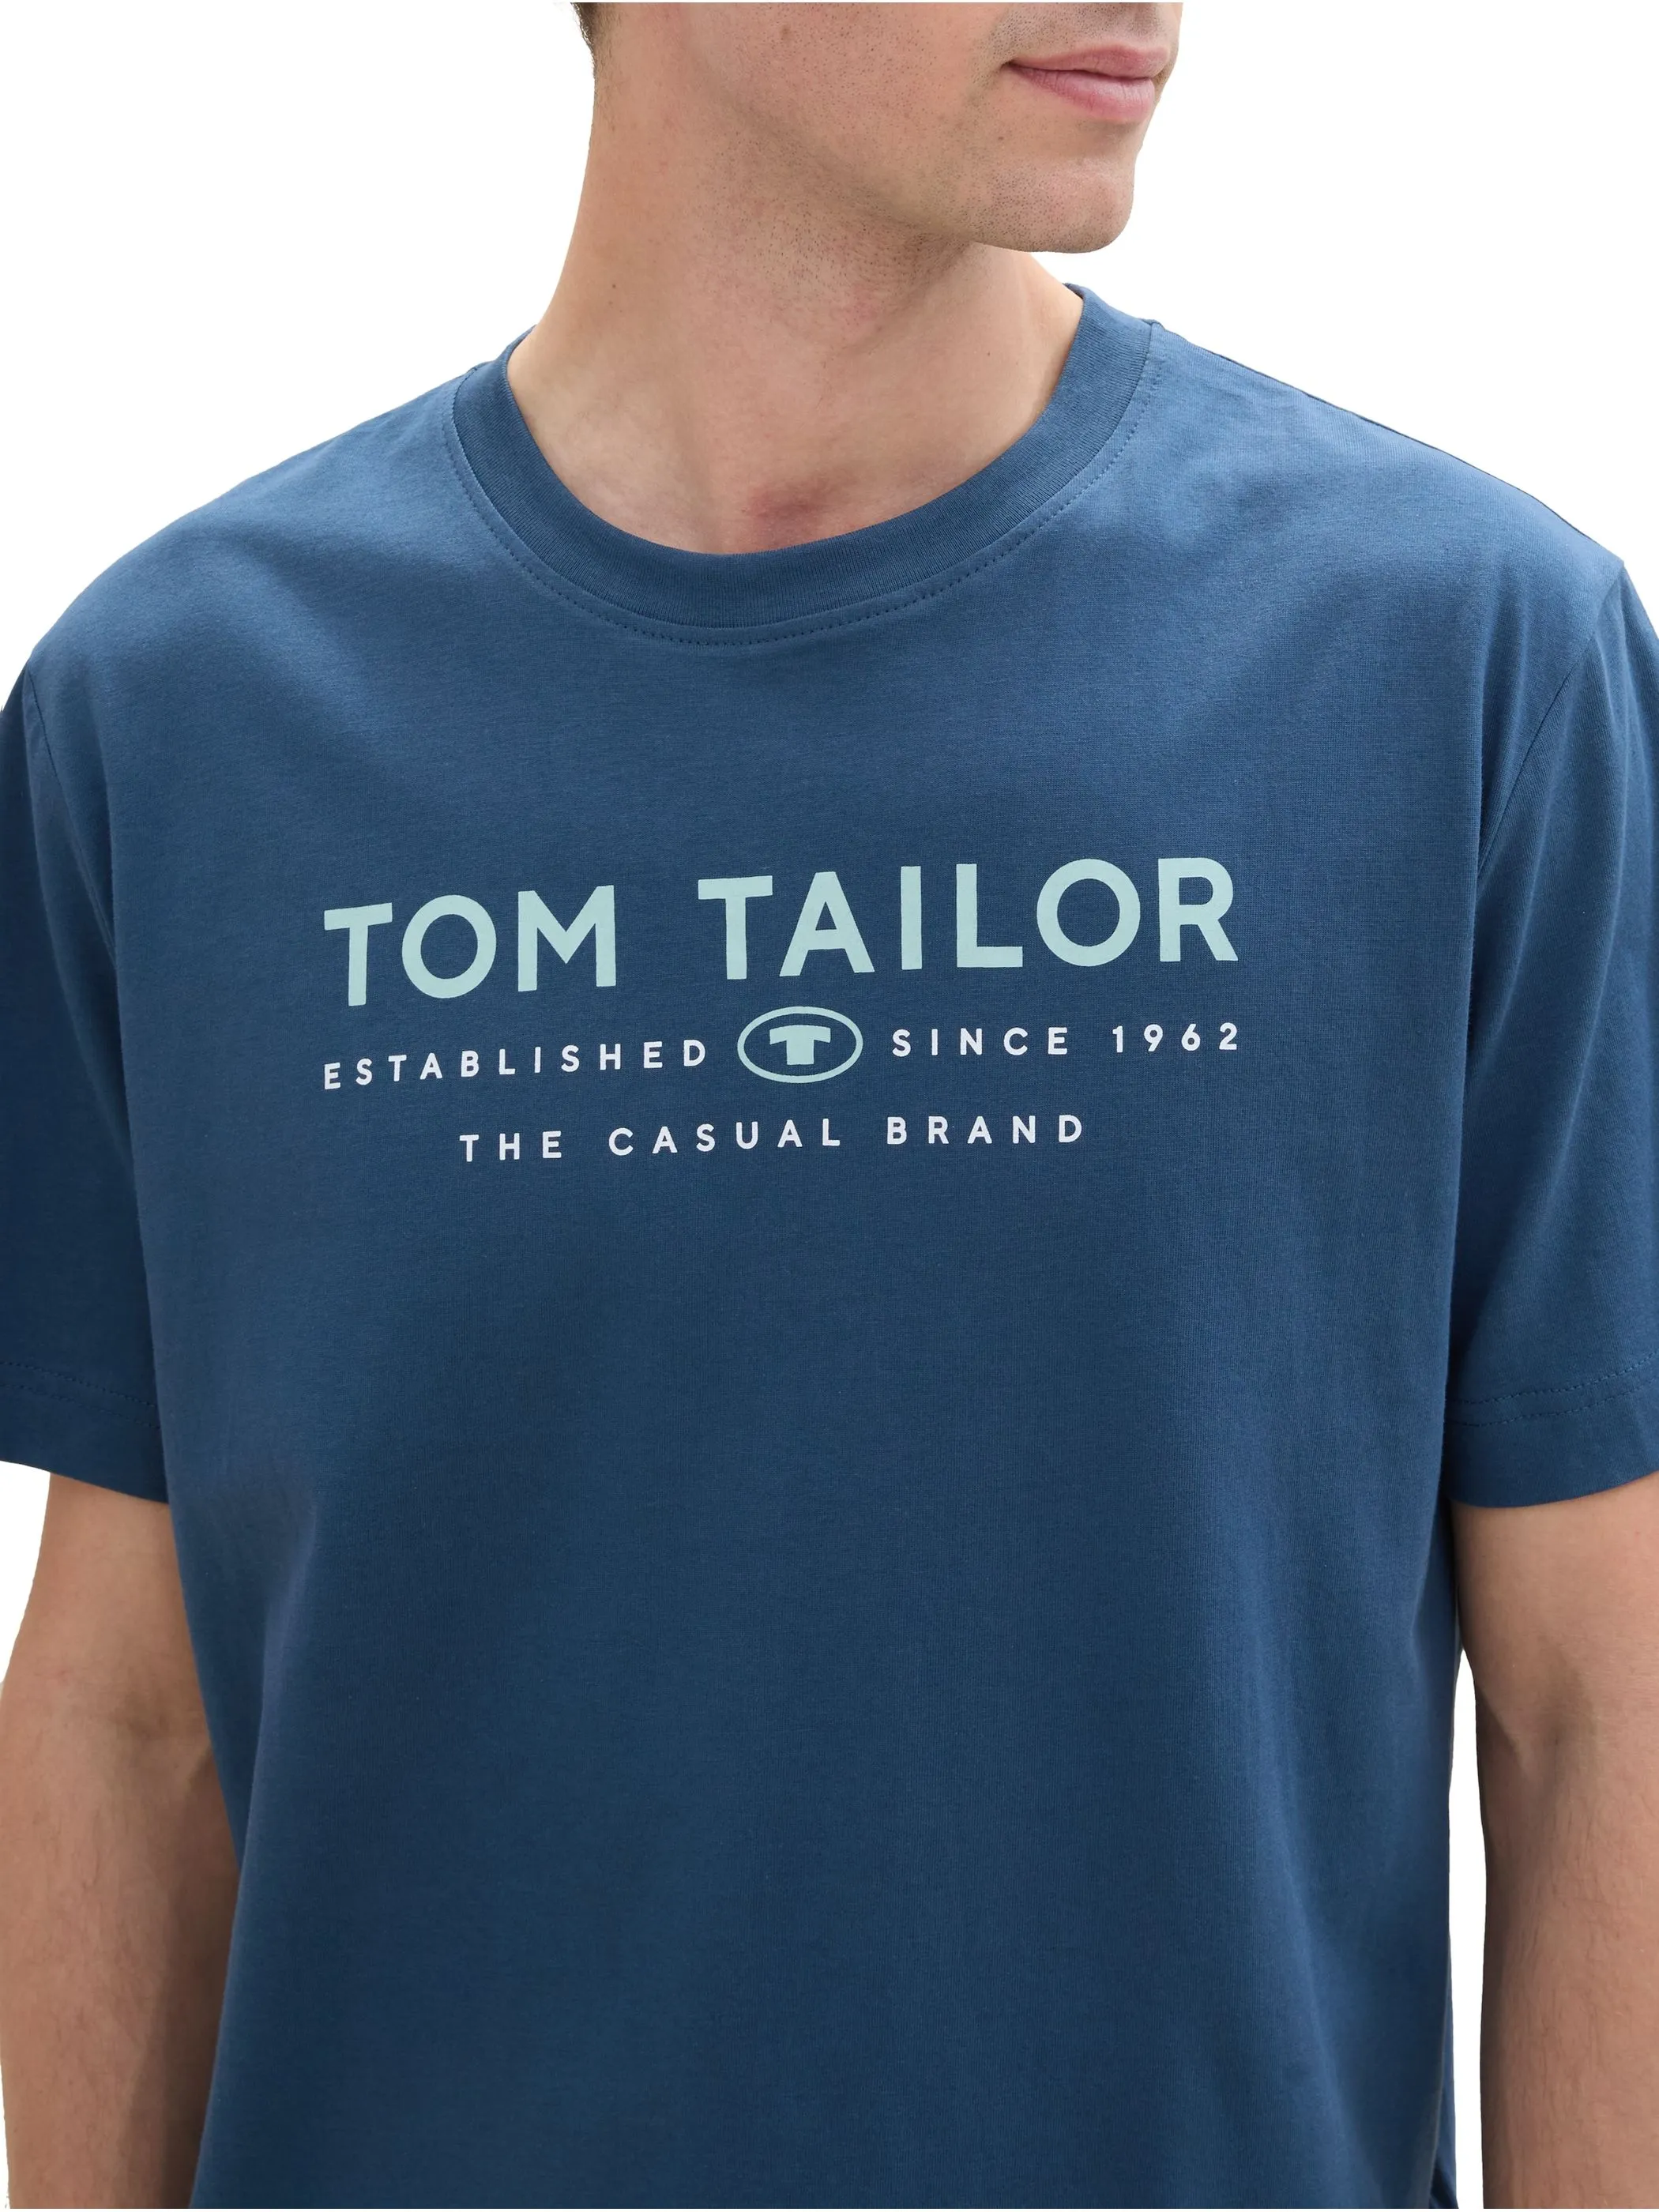 Tom Tailor 1043276 t-shirt with print Blau 898849 26779 3